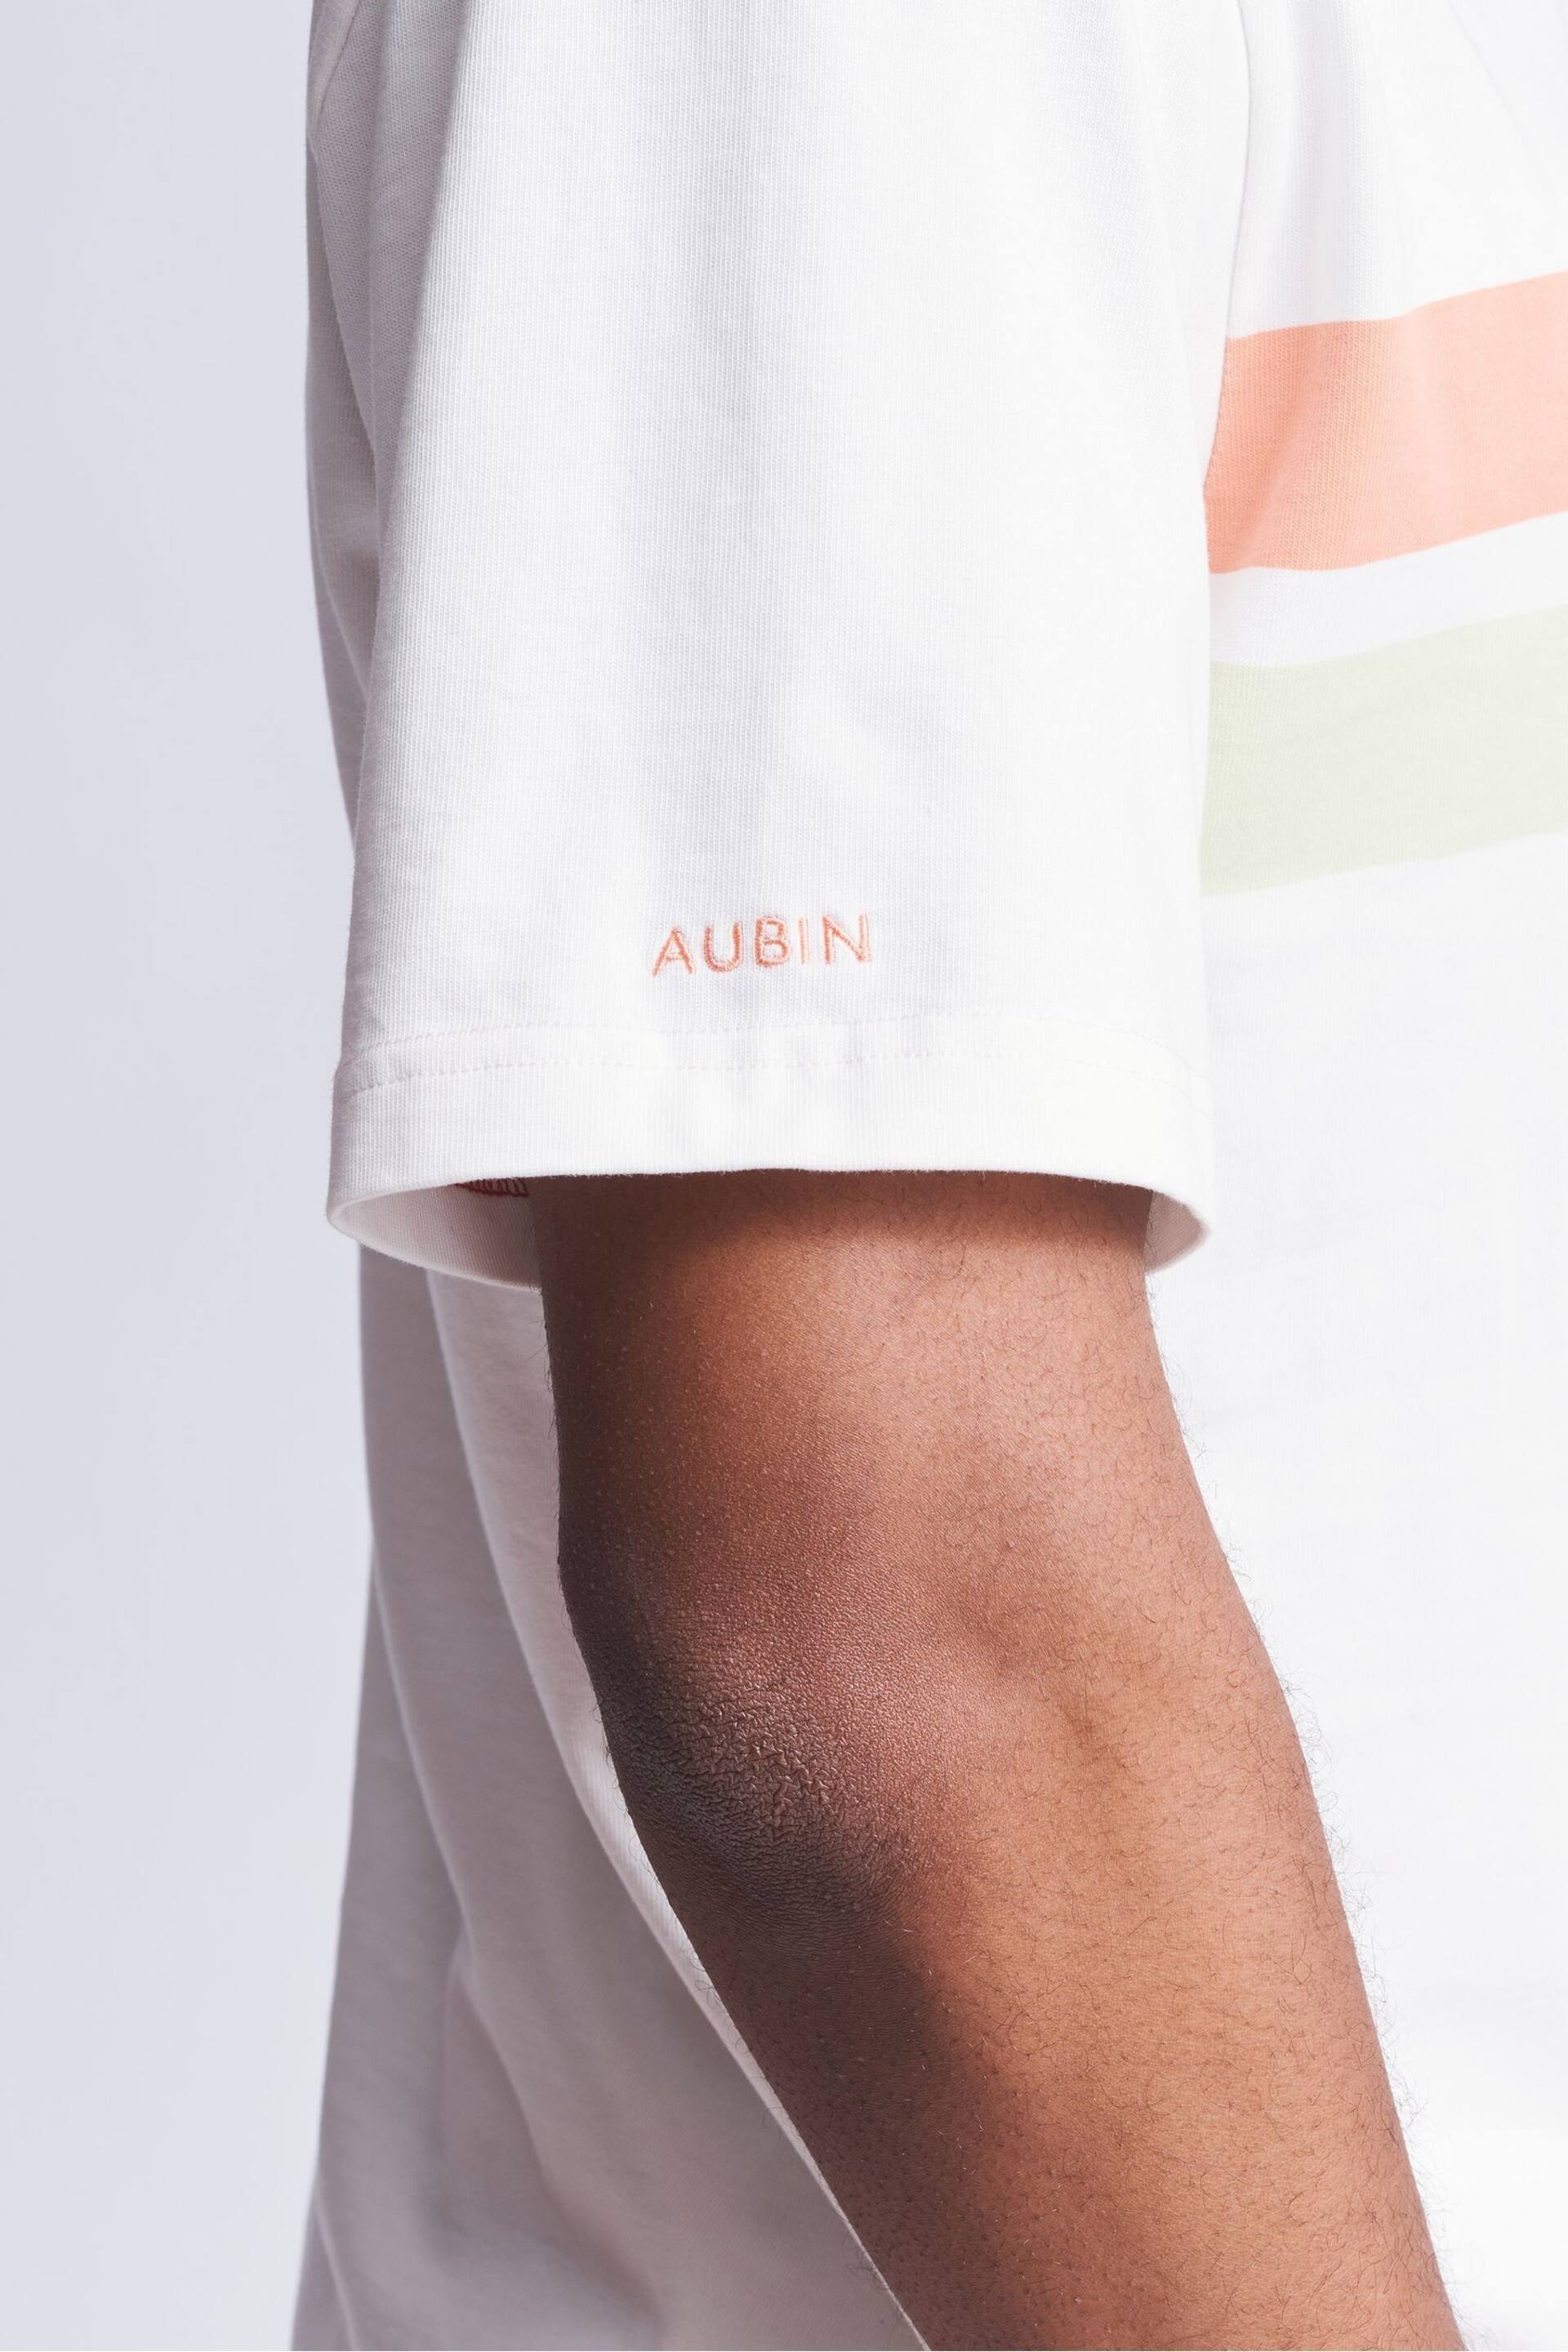 Aubin Santon Relaxed T-Shirt - Image 4 of 6